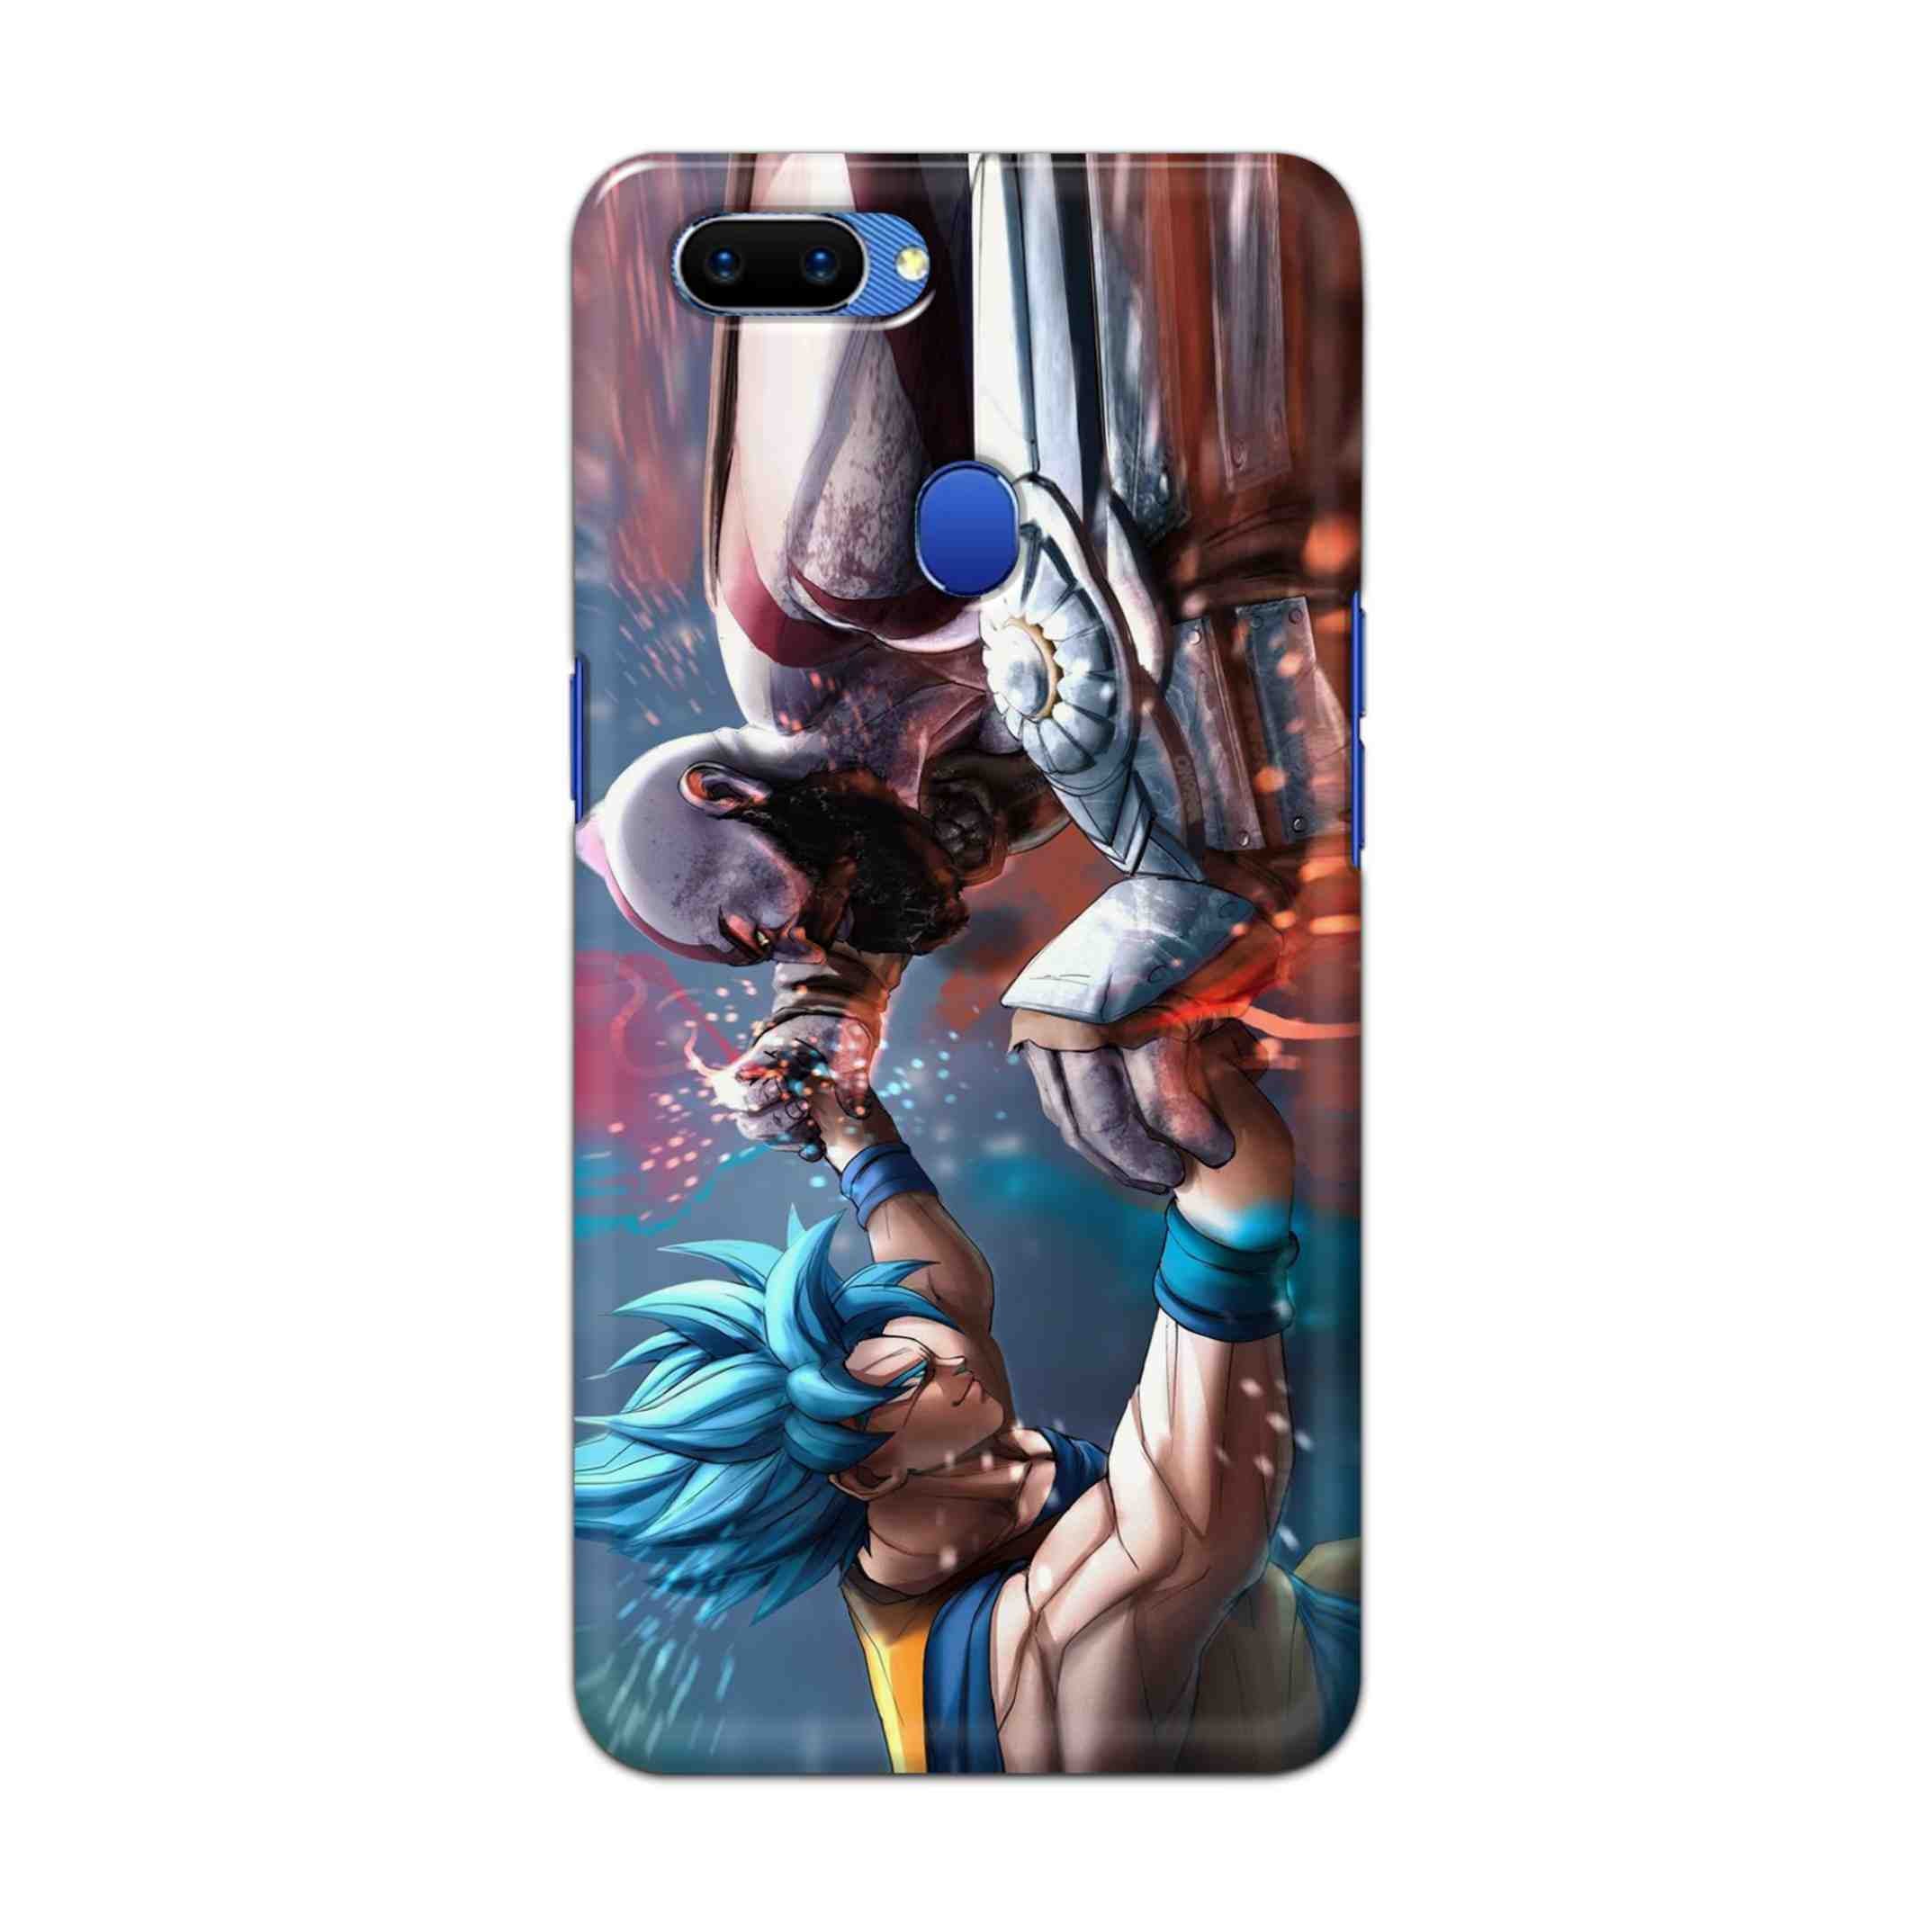 Buy Goku Vs Kratos Hard Back Mobile Phone Case Cover For Oppo A5 Online